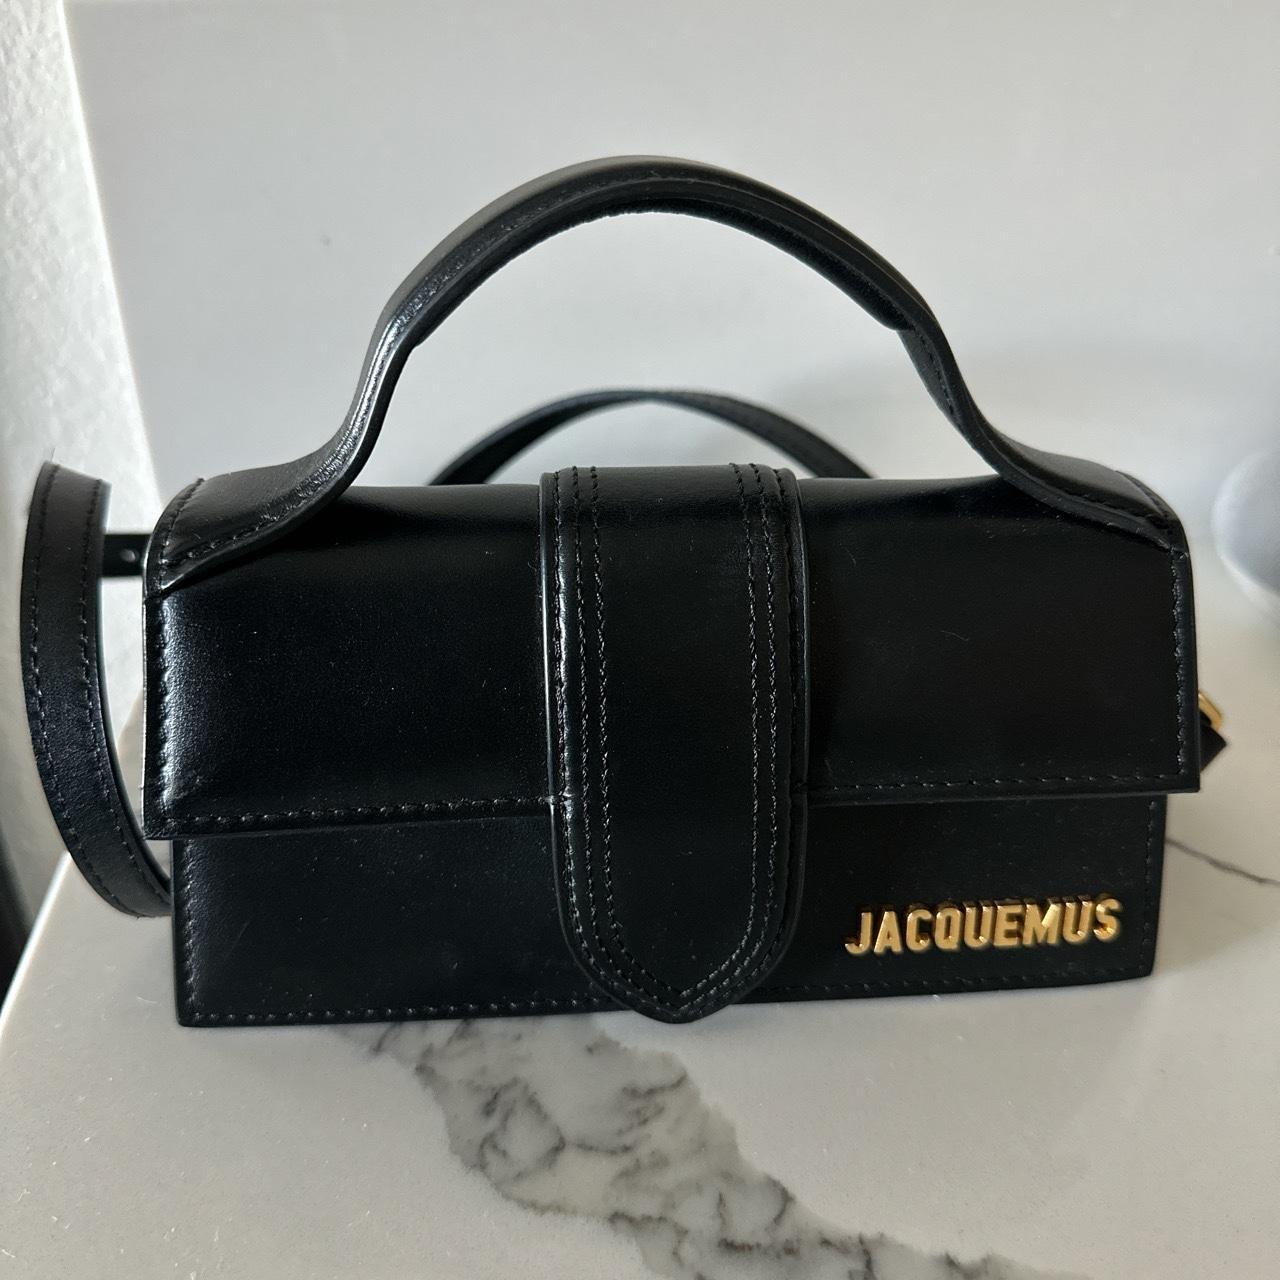 Jacquemus Women's Black Bag